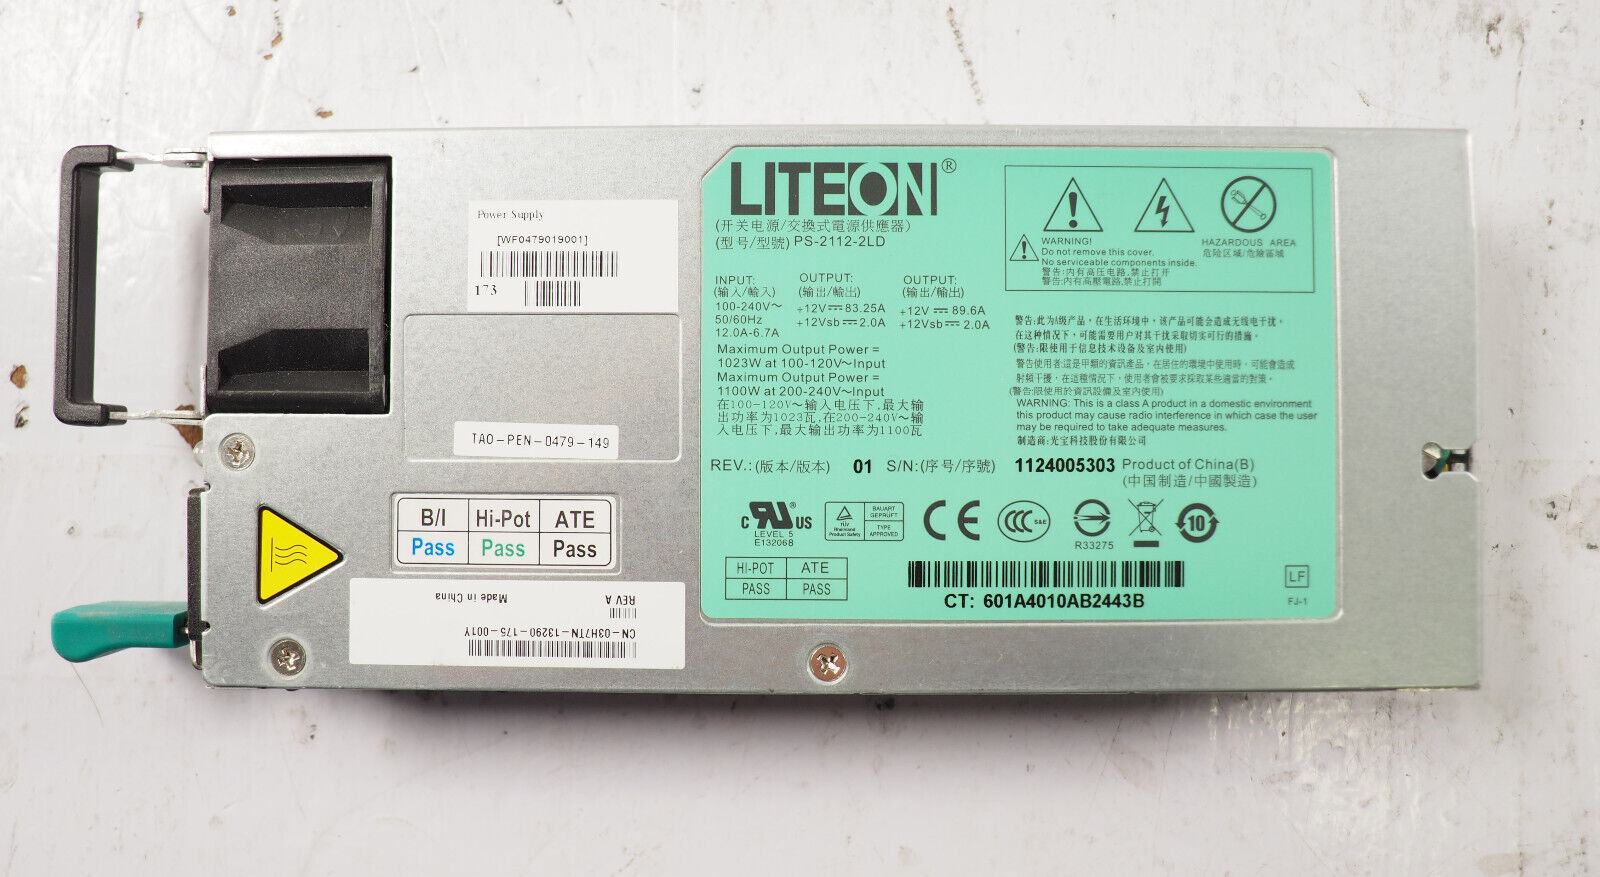 DELL LITEON Model: PS-2112-2LD P/N: 3H7TN 1100W Power Supply